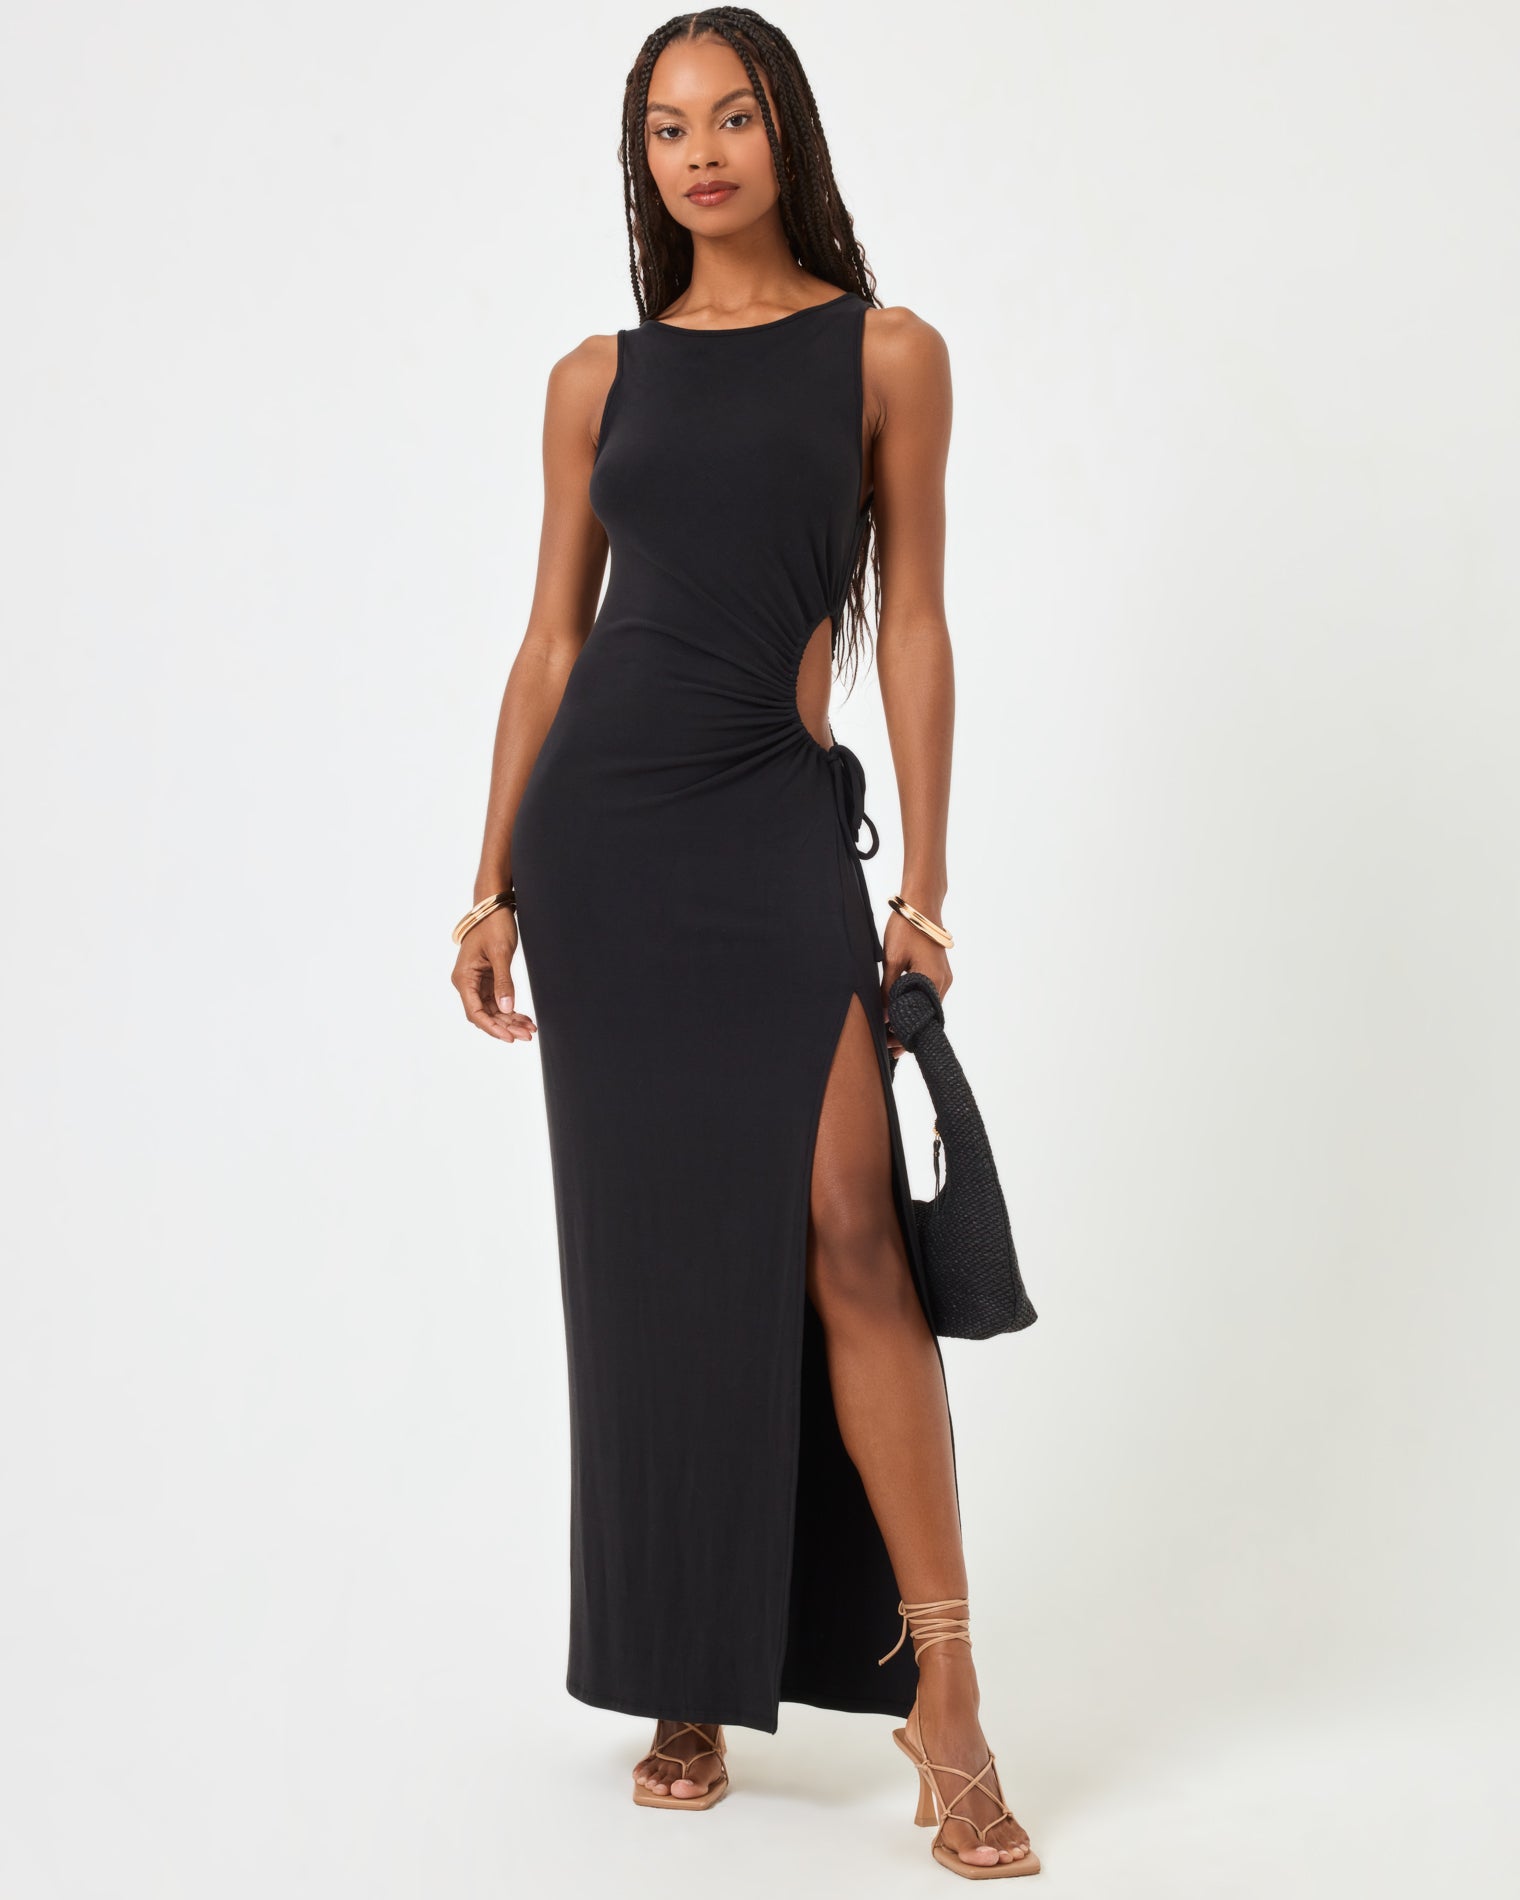 Tiana Dress - Black Black | Model: Taelor  (size: S)